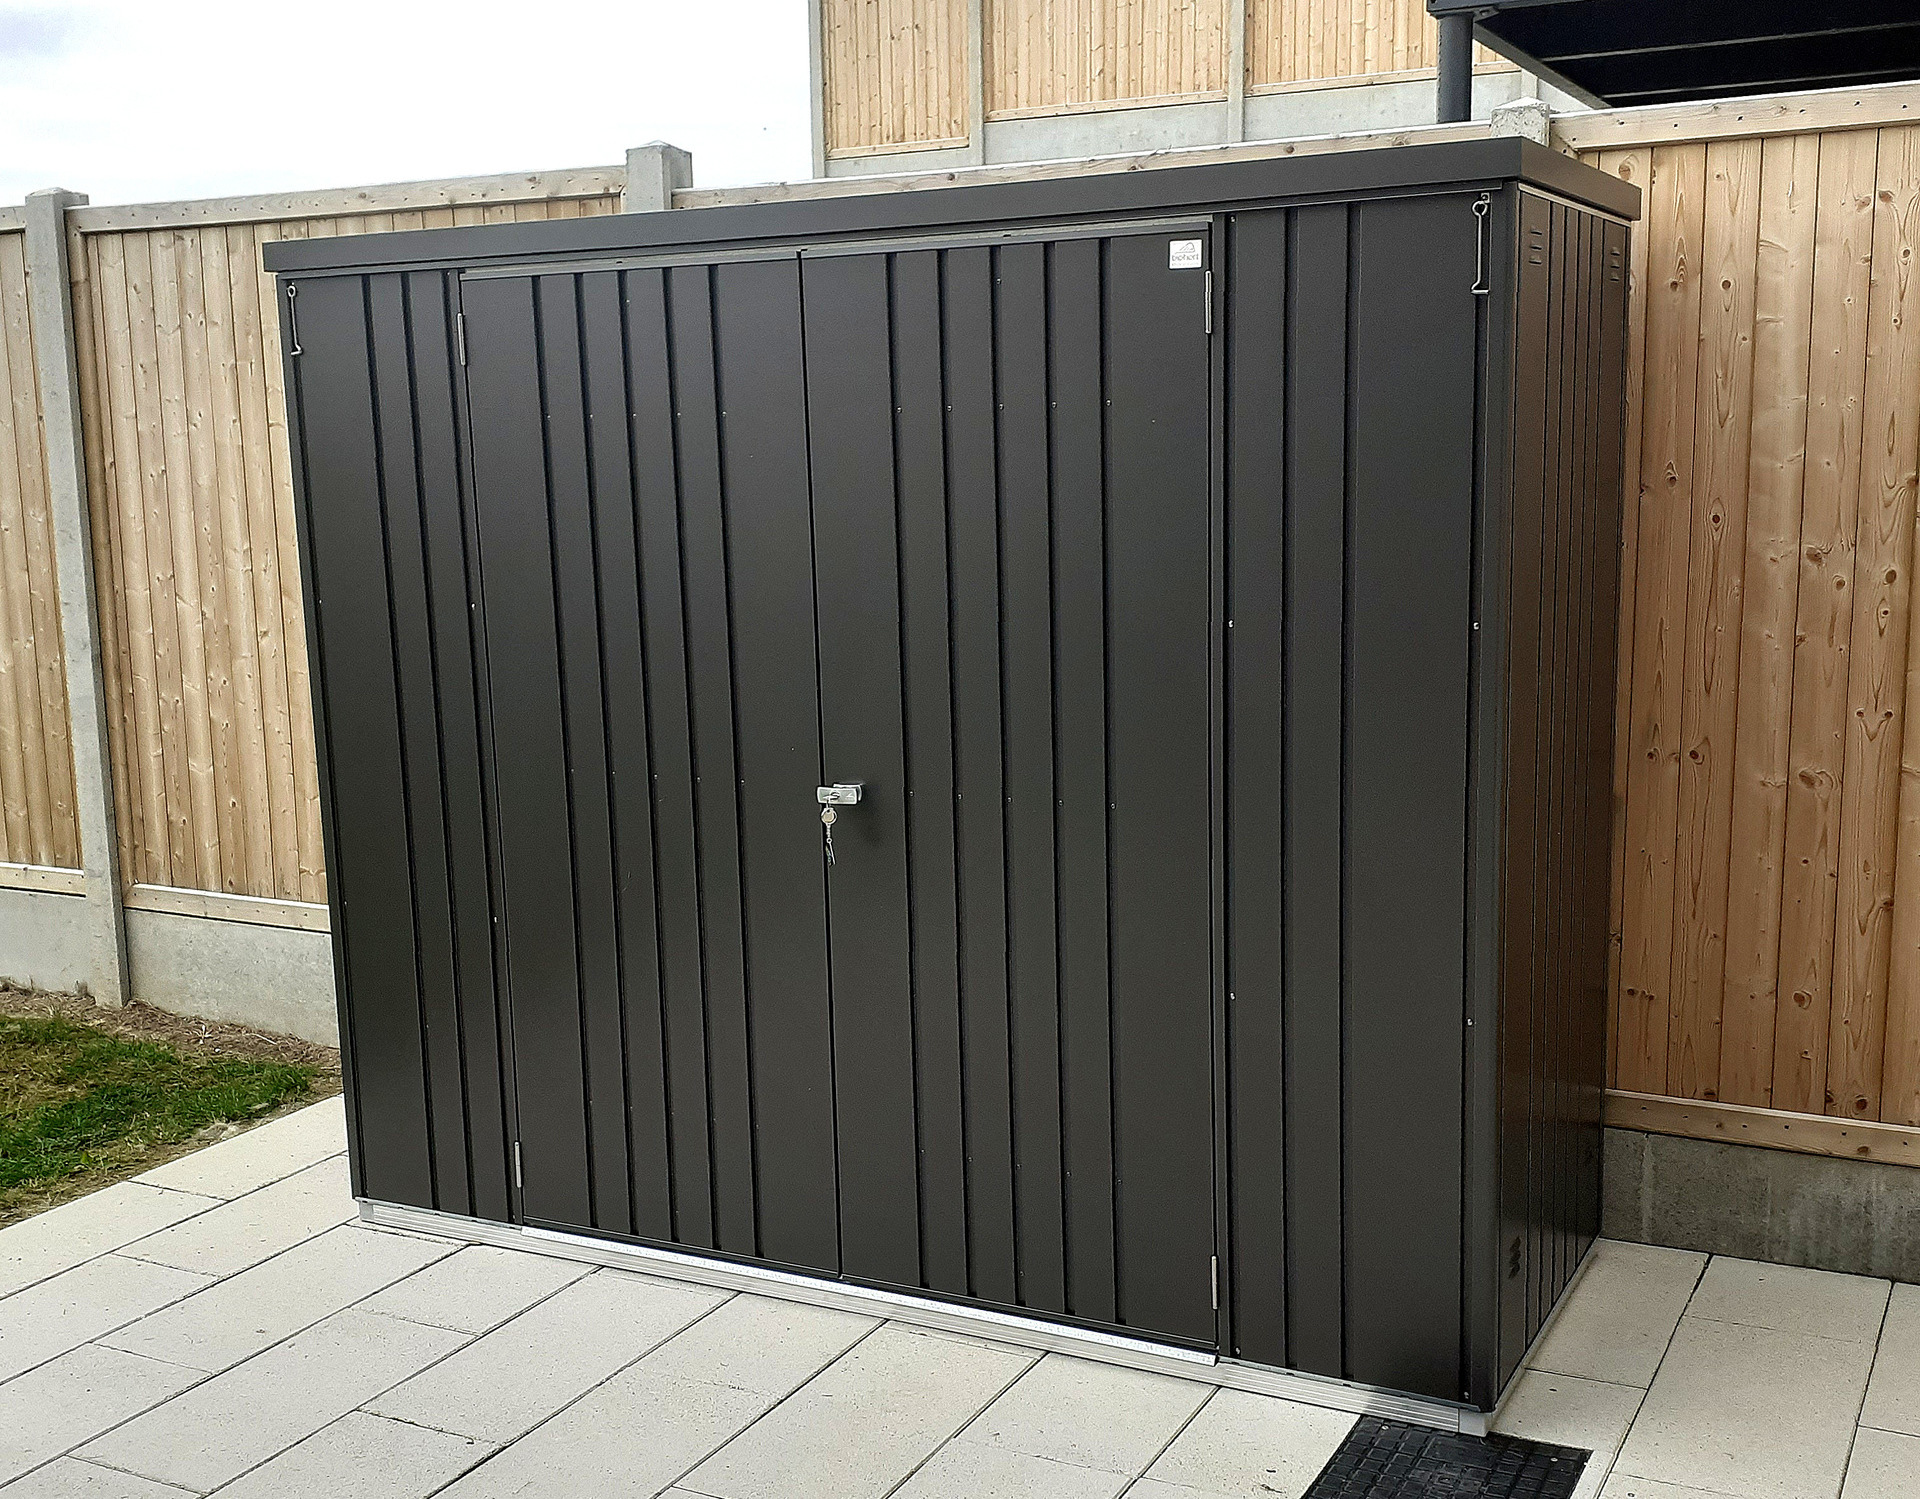 Biohort Equipment Locker 230 in metallic dark grey, supplied + fitted in Naas, Co Kildare | Stylish, Versatile, Secure & Rainproof Patio Storage Solutions | FREE Fitting